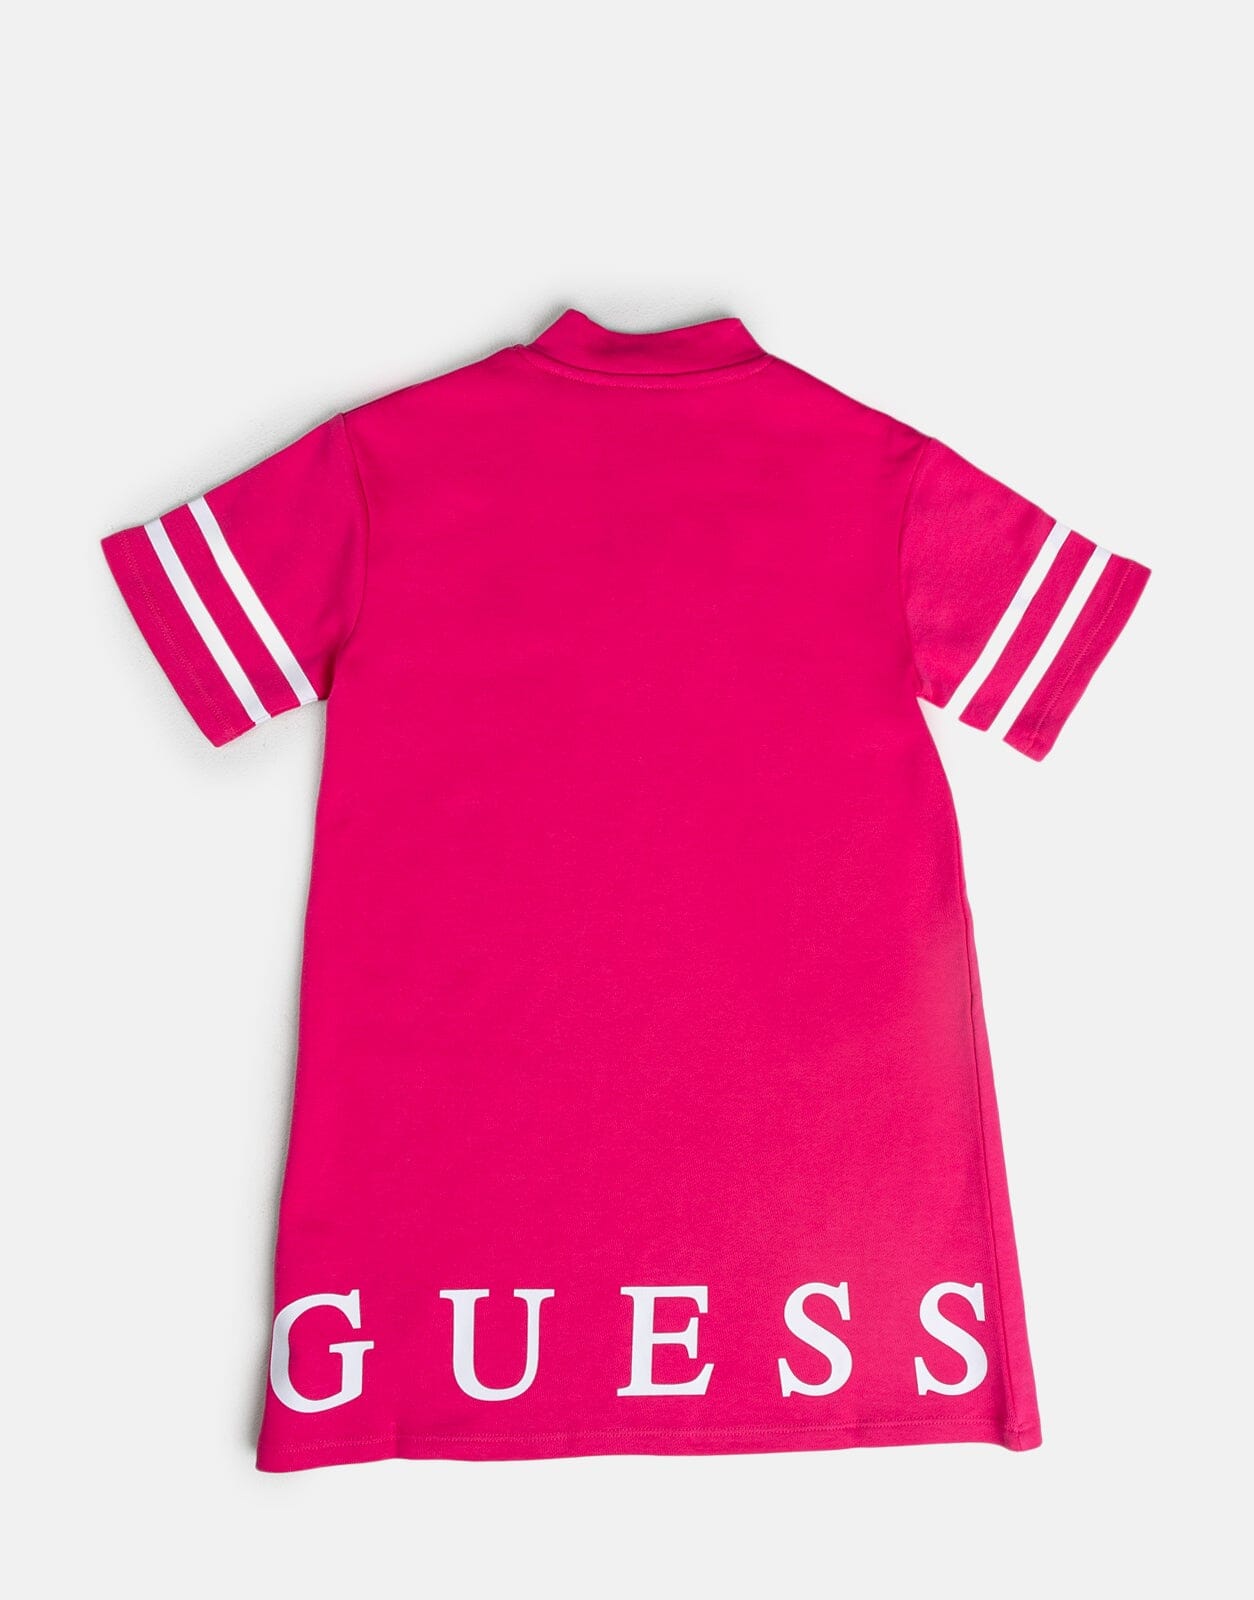 Guess Kids Girls 7G French Terry Dress FUS - Subwear